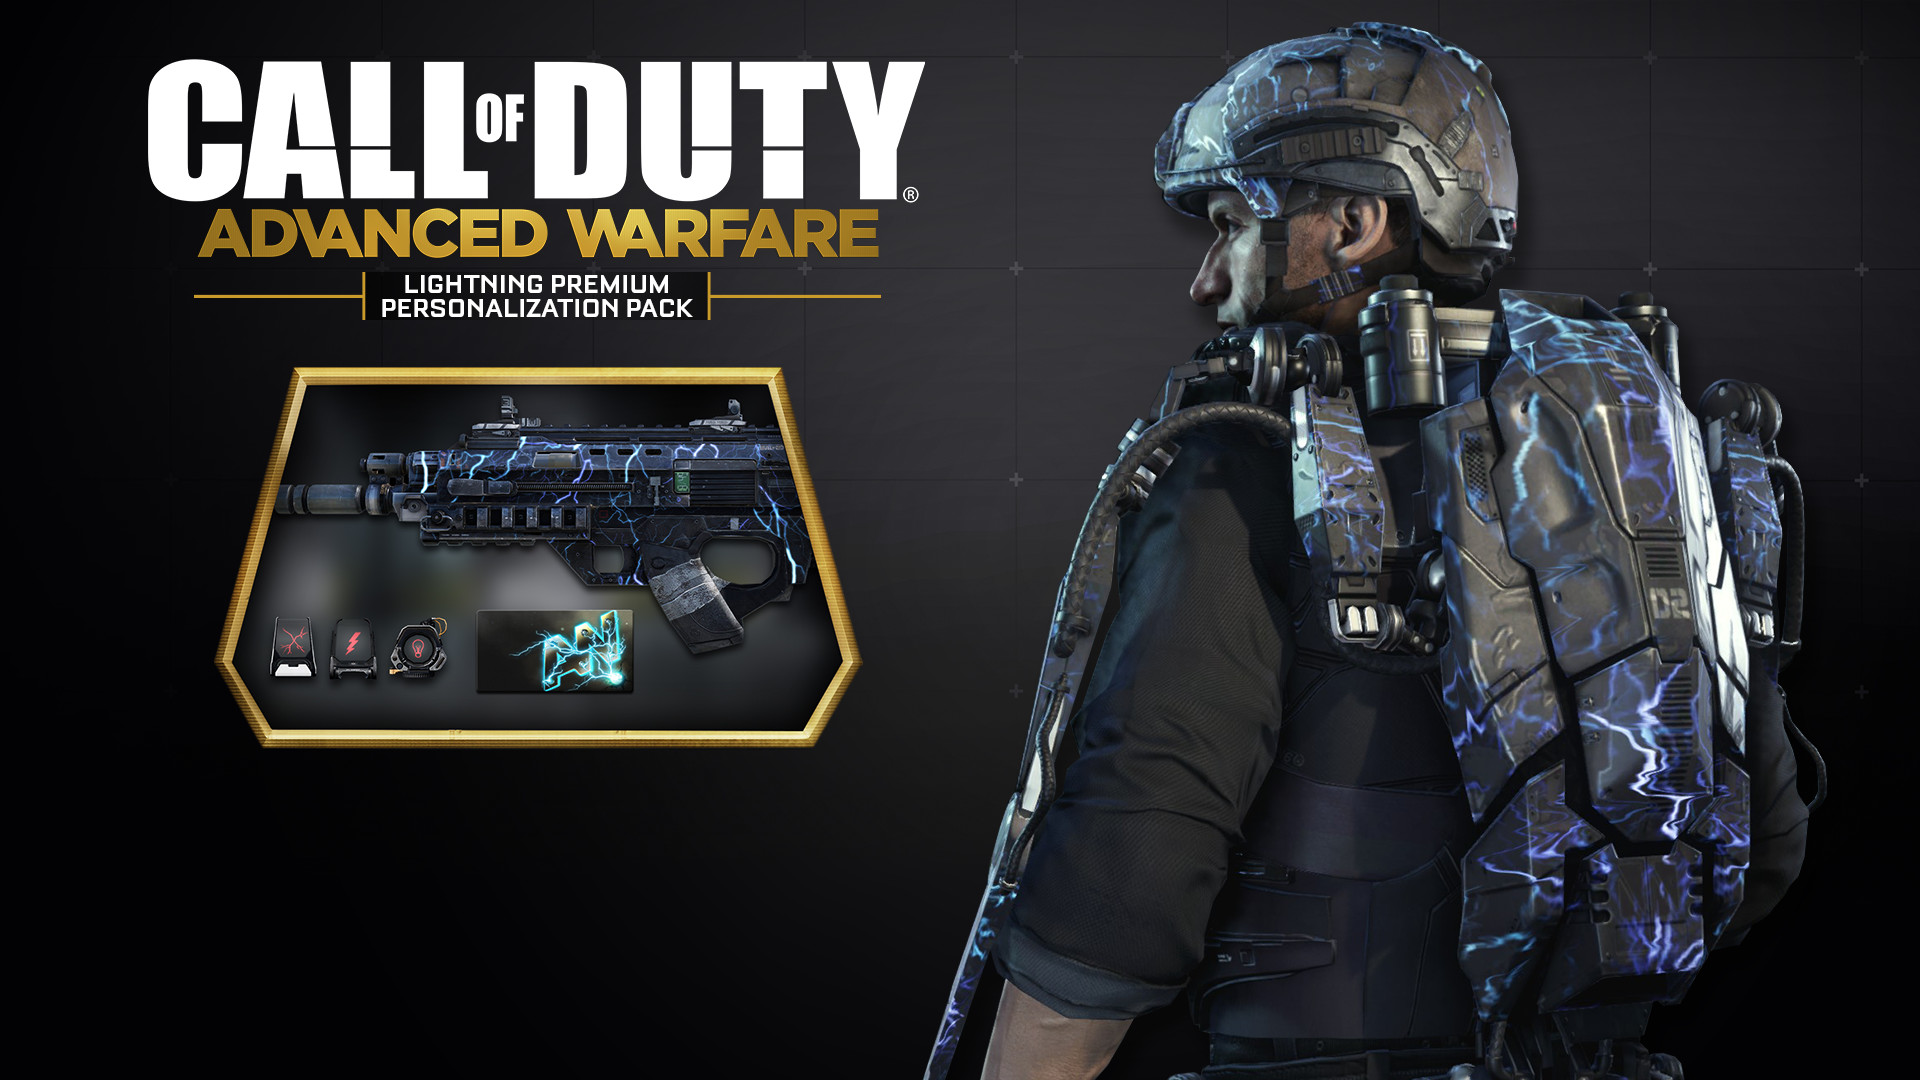 Call of Duty®: Advanced Warfare - Lightning Premium Personalization Pack Featured Screenshot #1